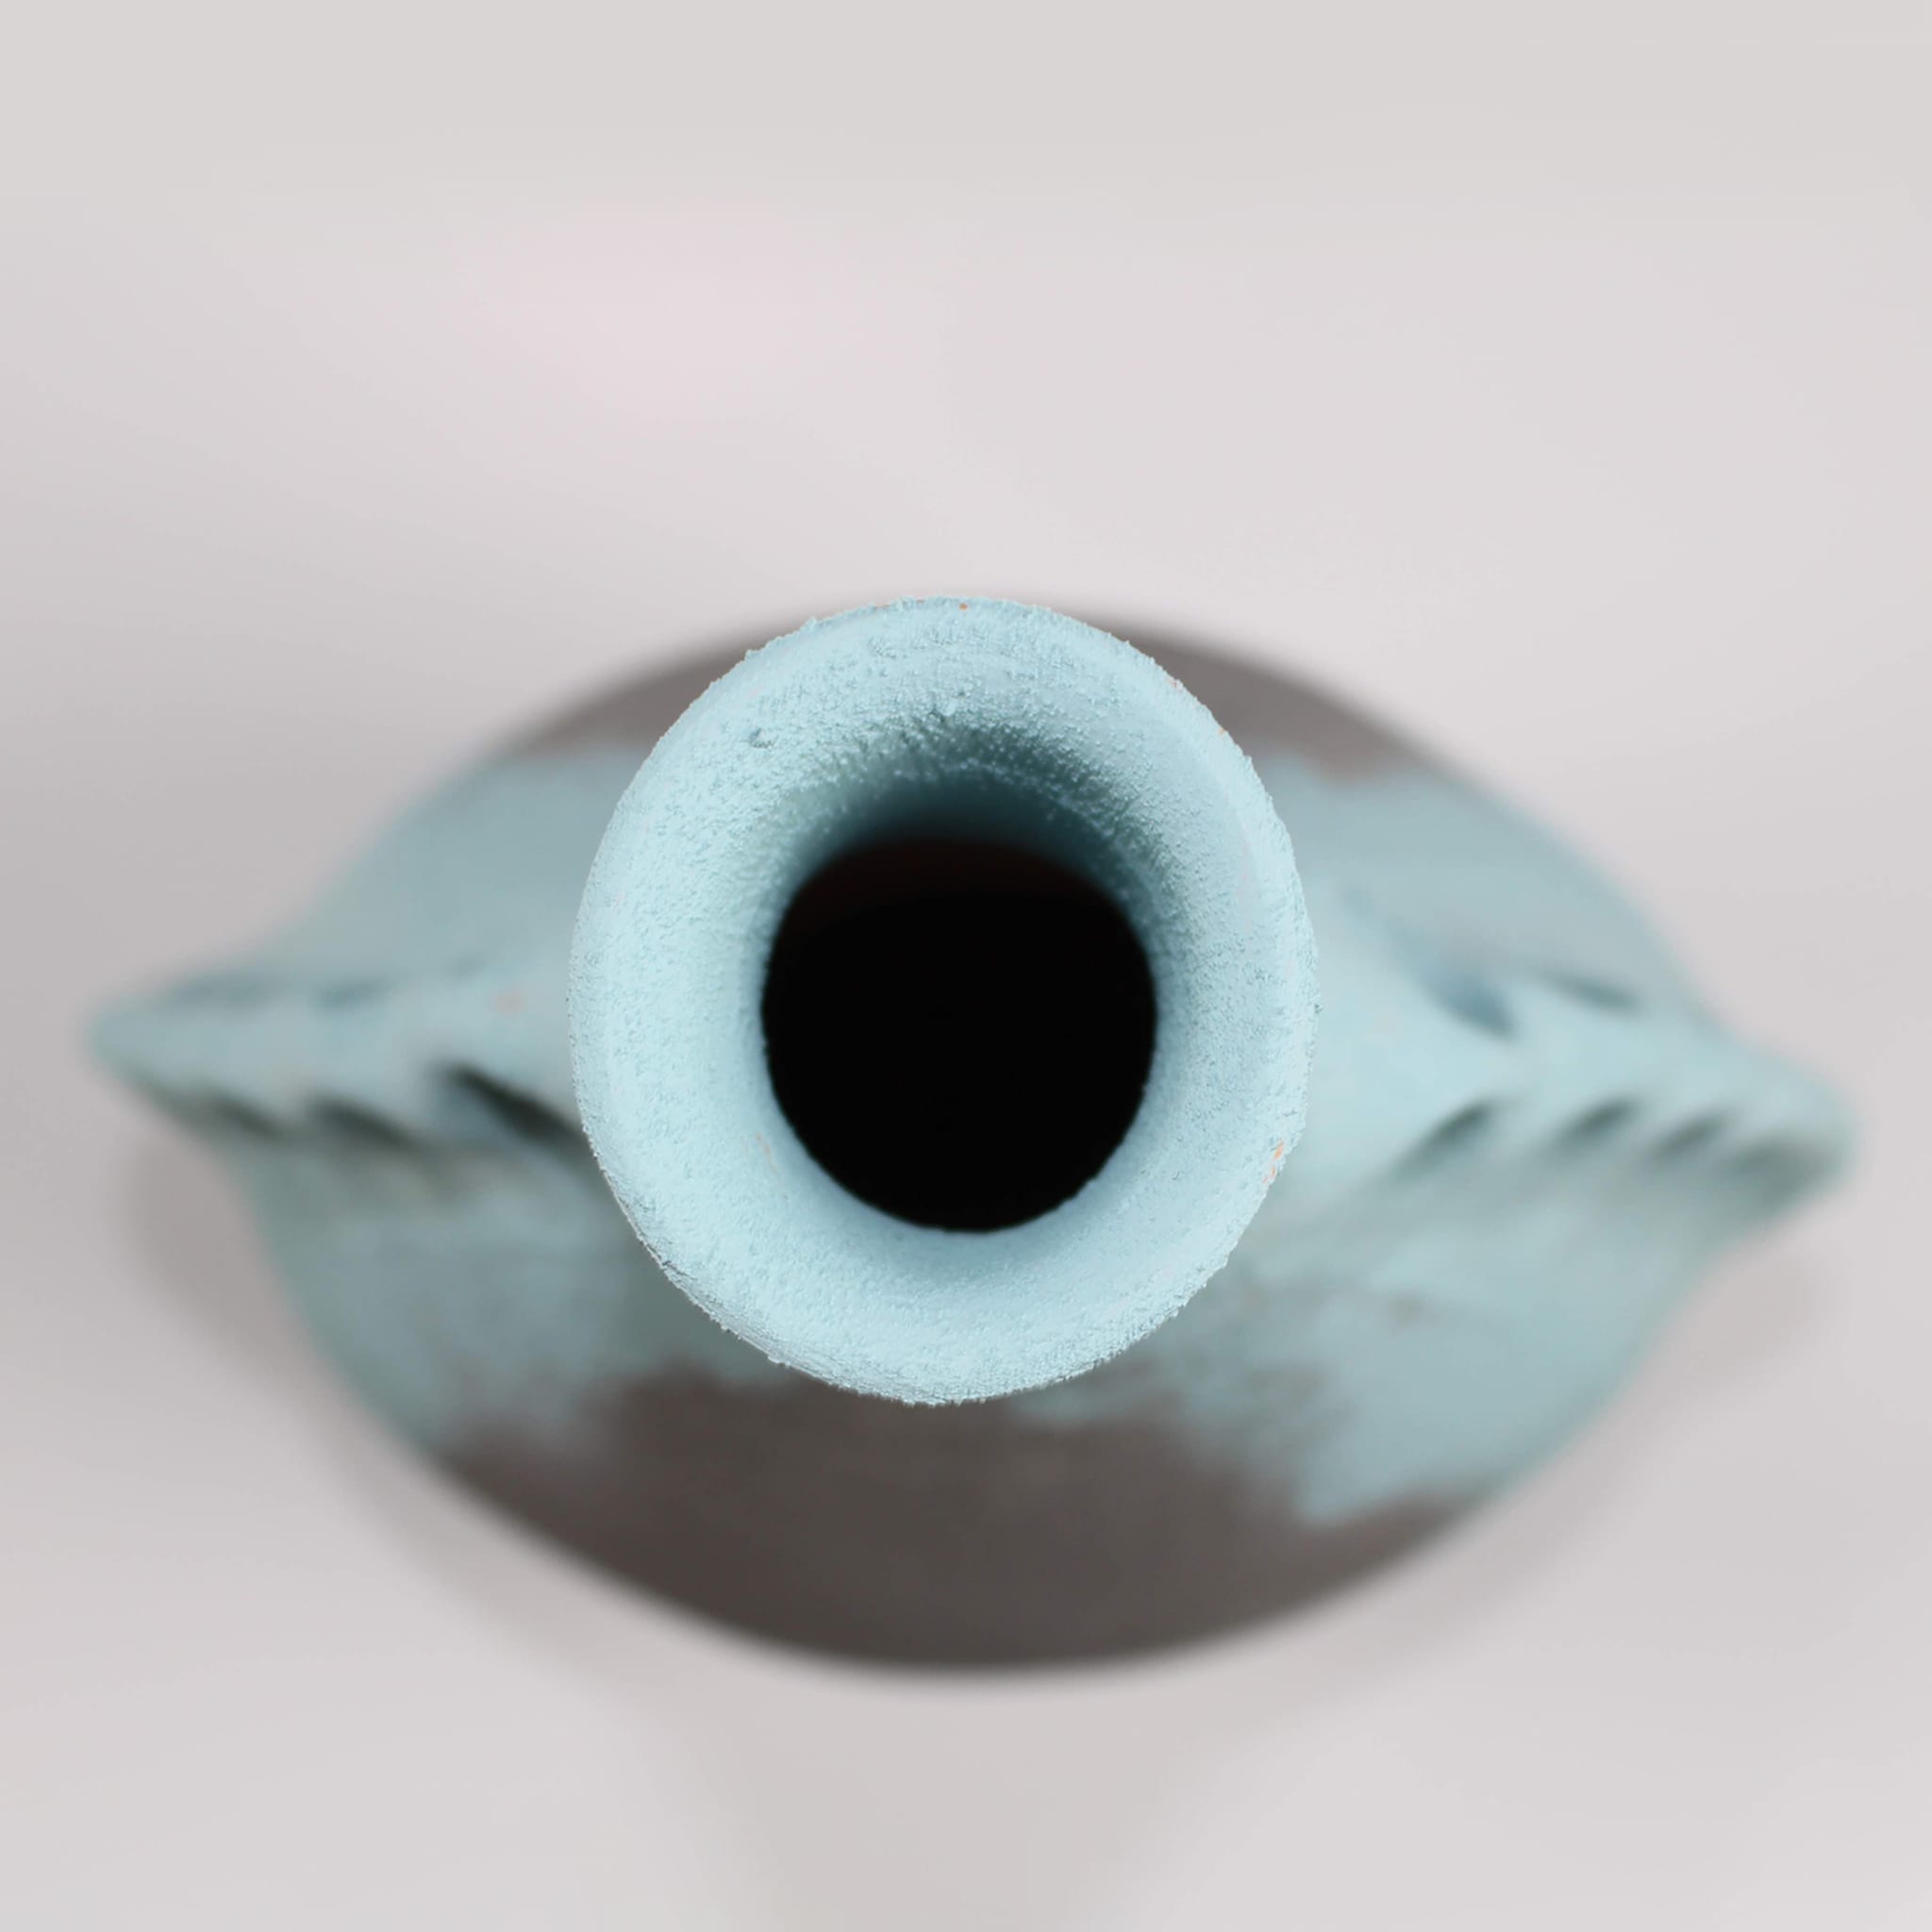 Almond-Shaped Azure & Gray Vase 20 by Mascia Meccani - Alternative view 5